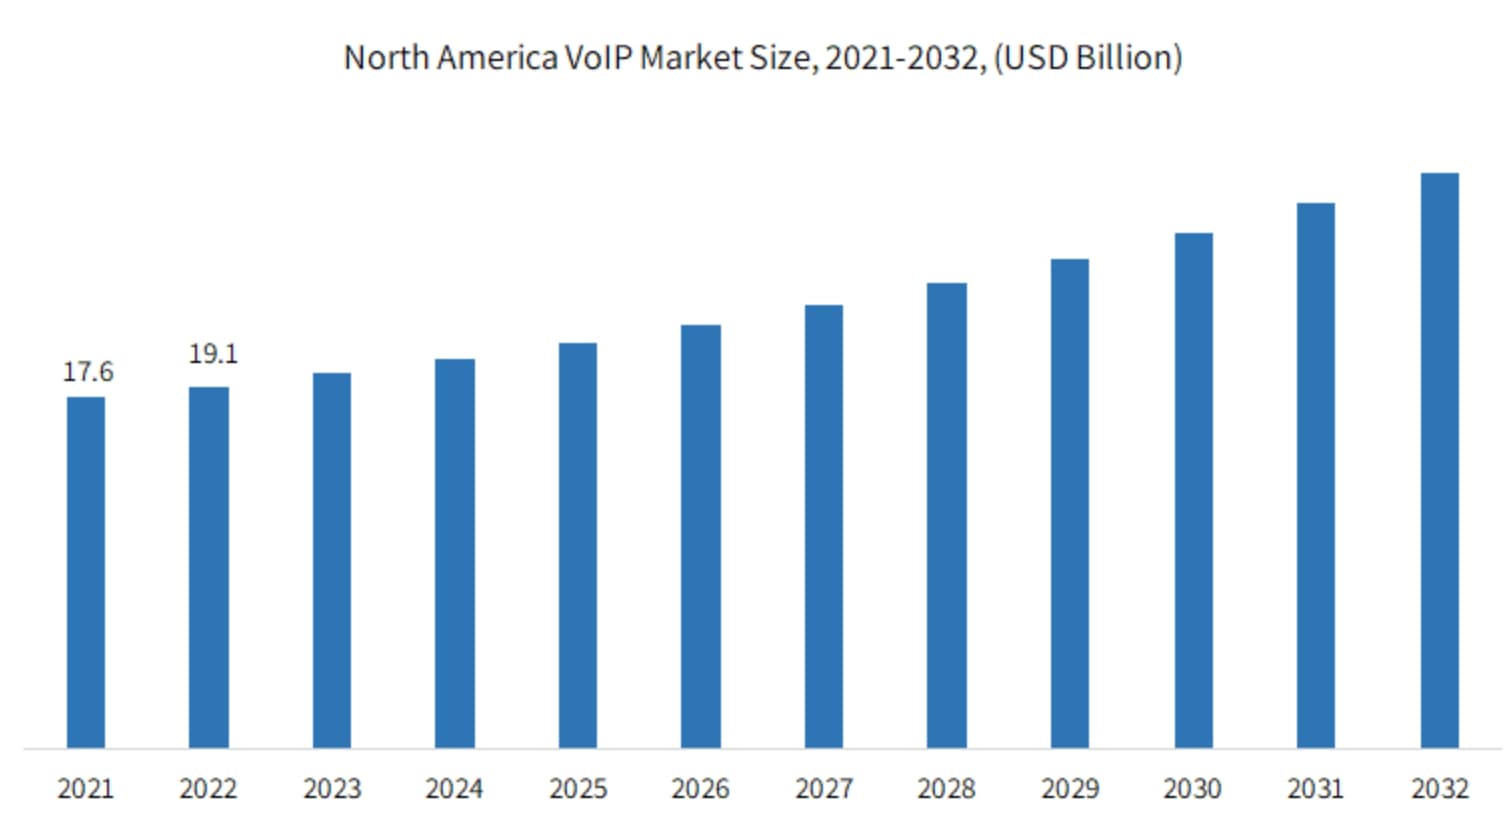 North America VoIP Market Size 2021-2032